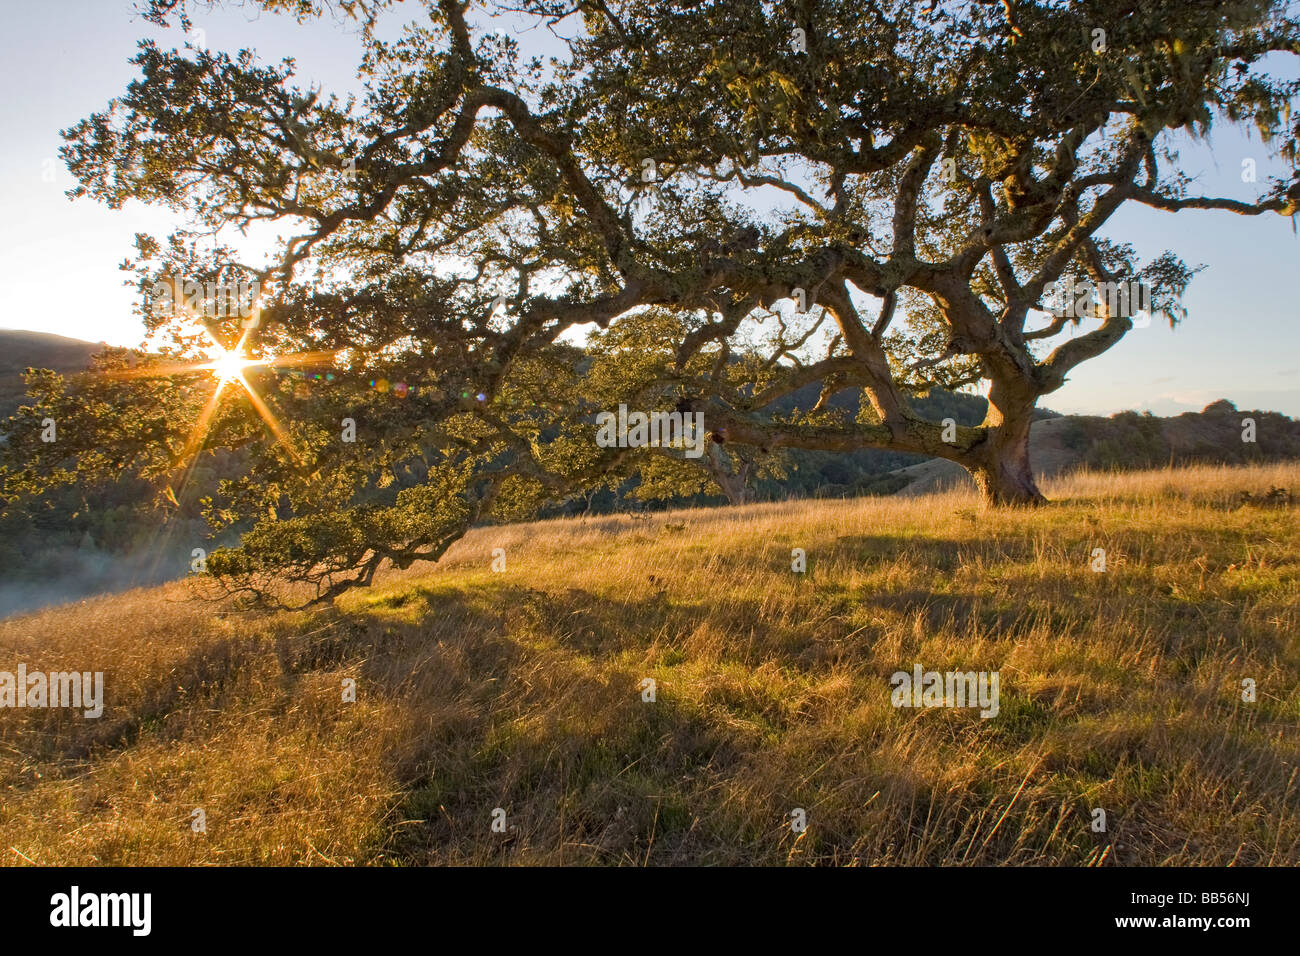 Coast Live Oak Tree and Grassland - Santa Lucia Preserve, California. Stock Photo